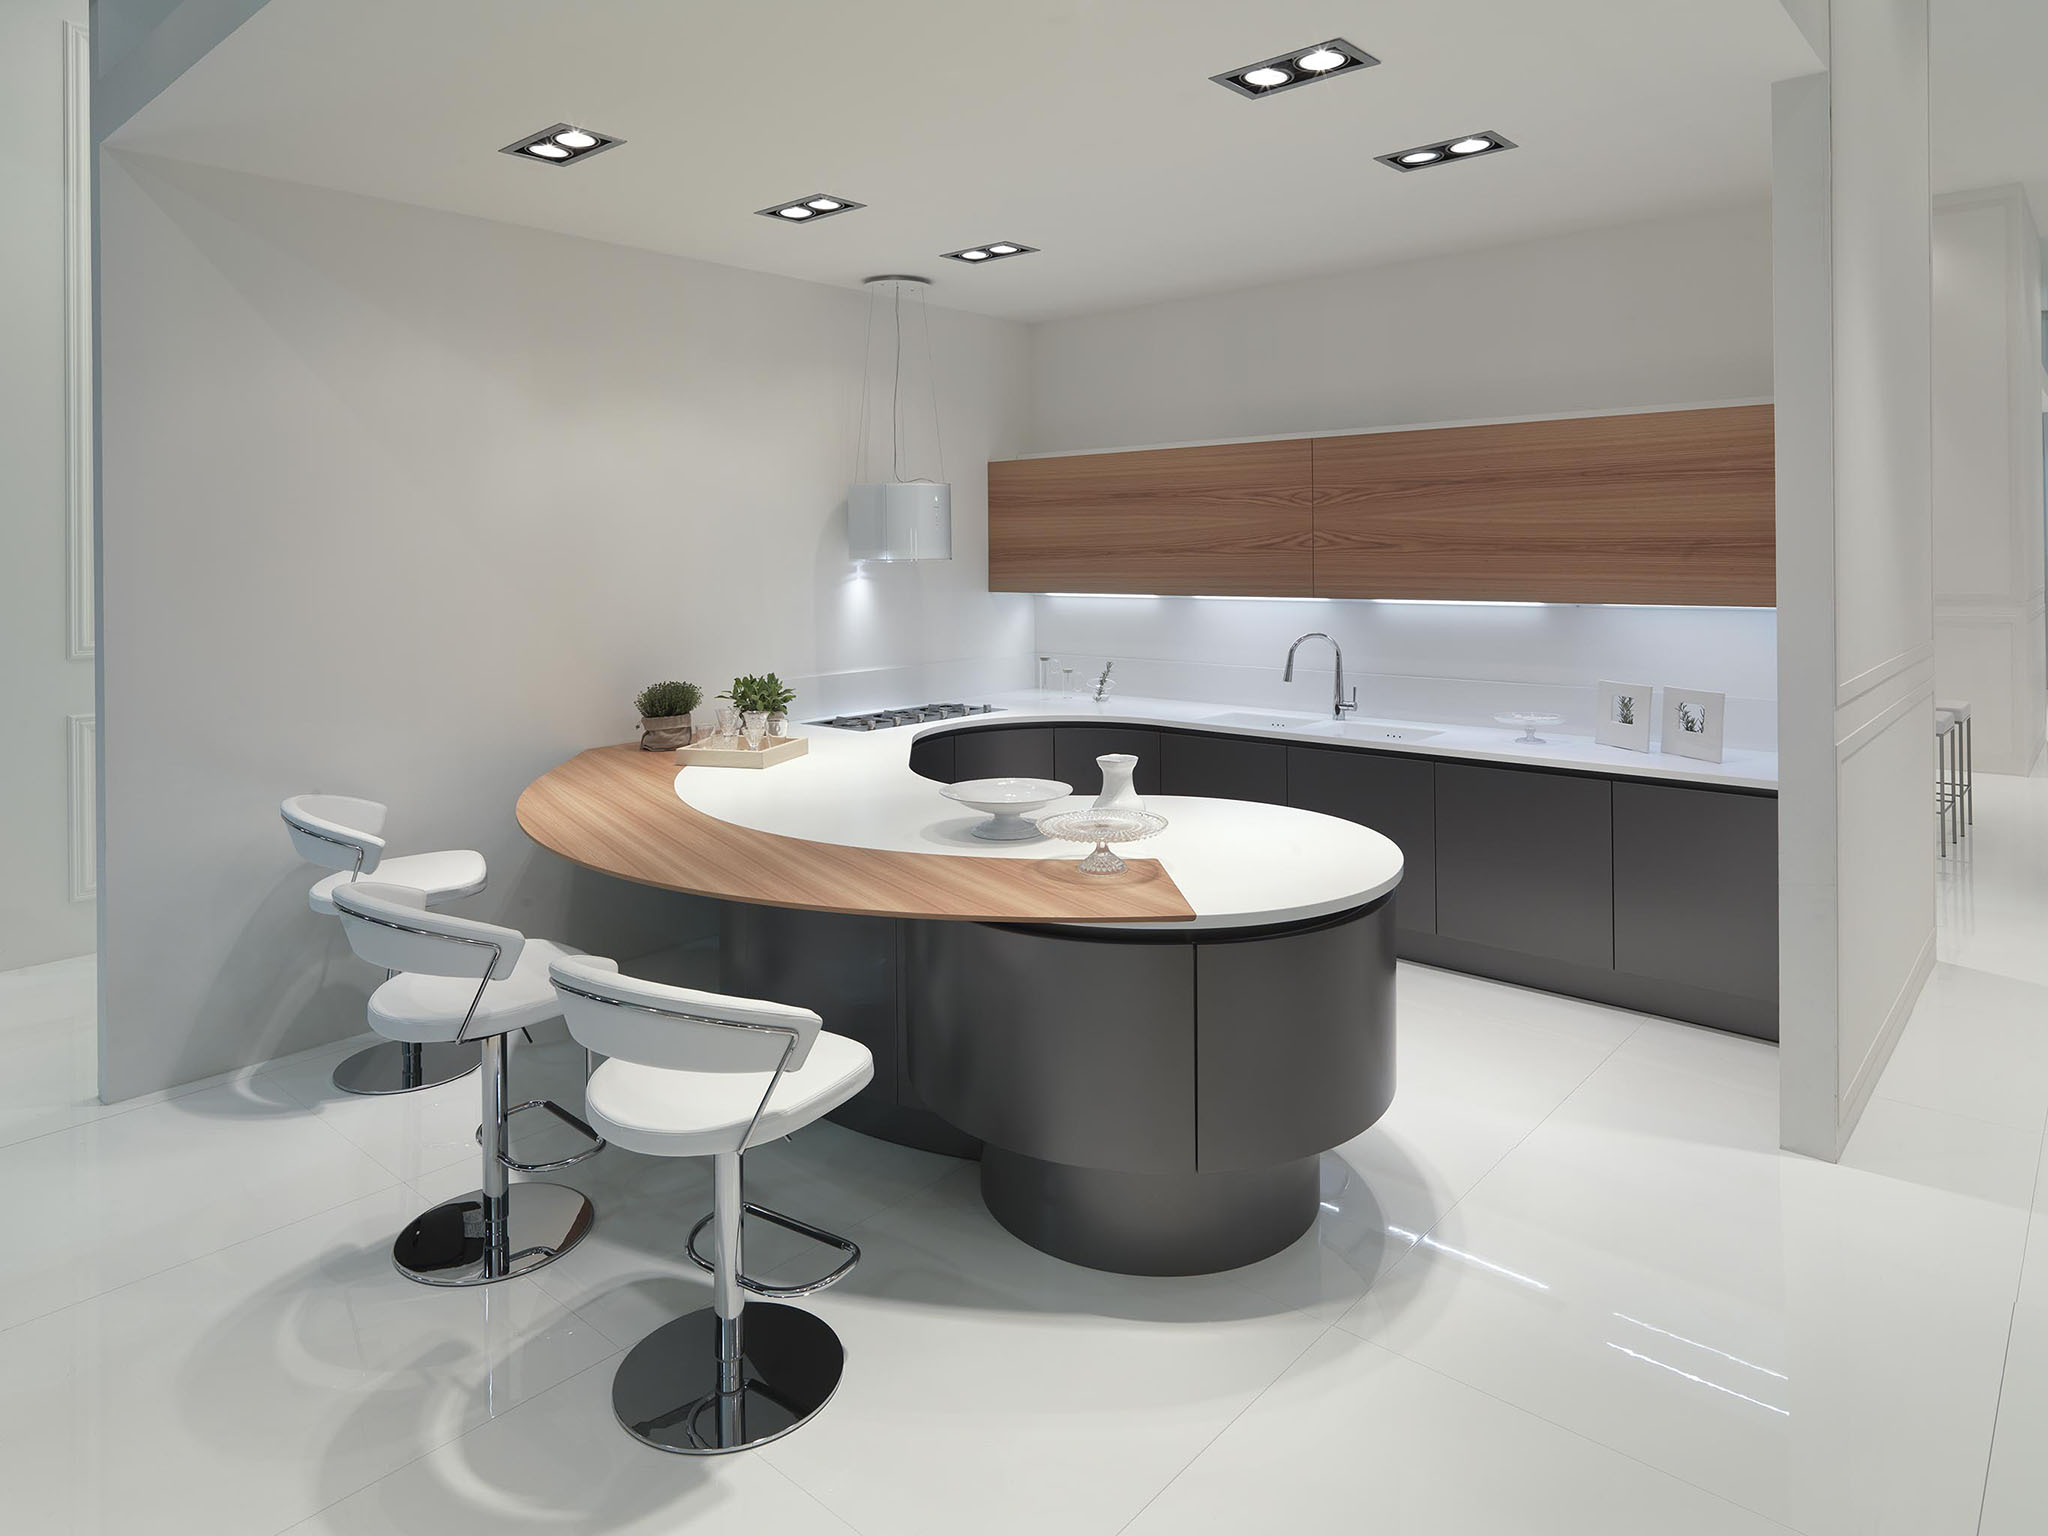 md creative lab project kitchen showroom design 1